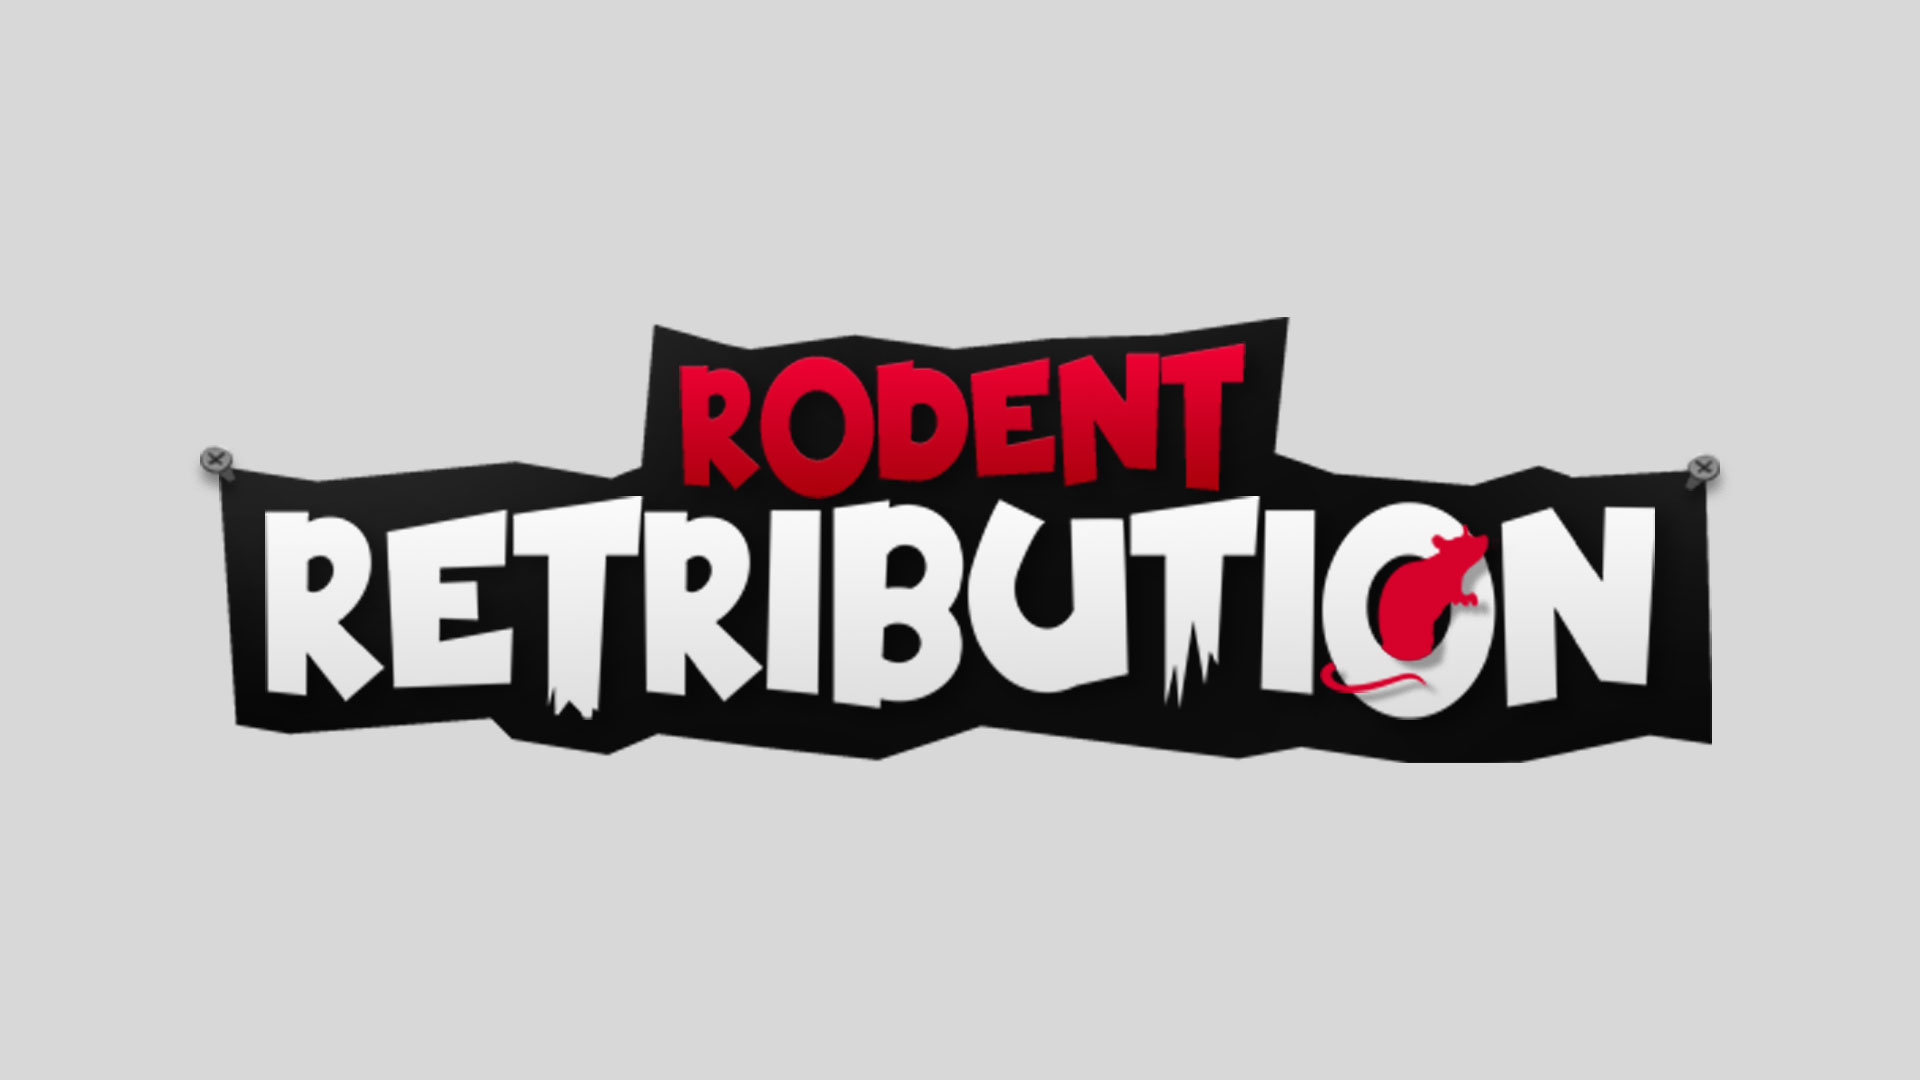 Rodent Retribution